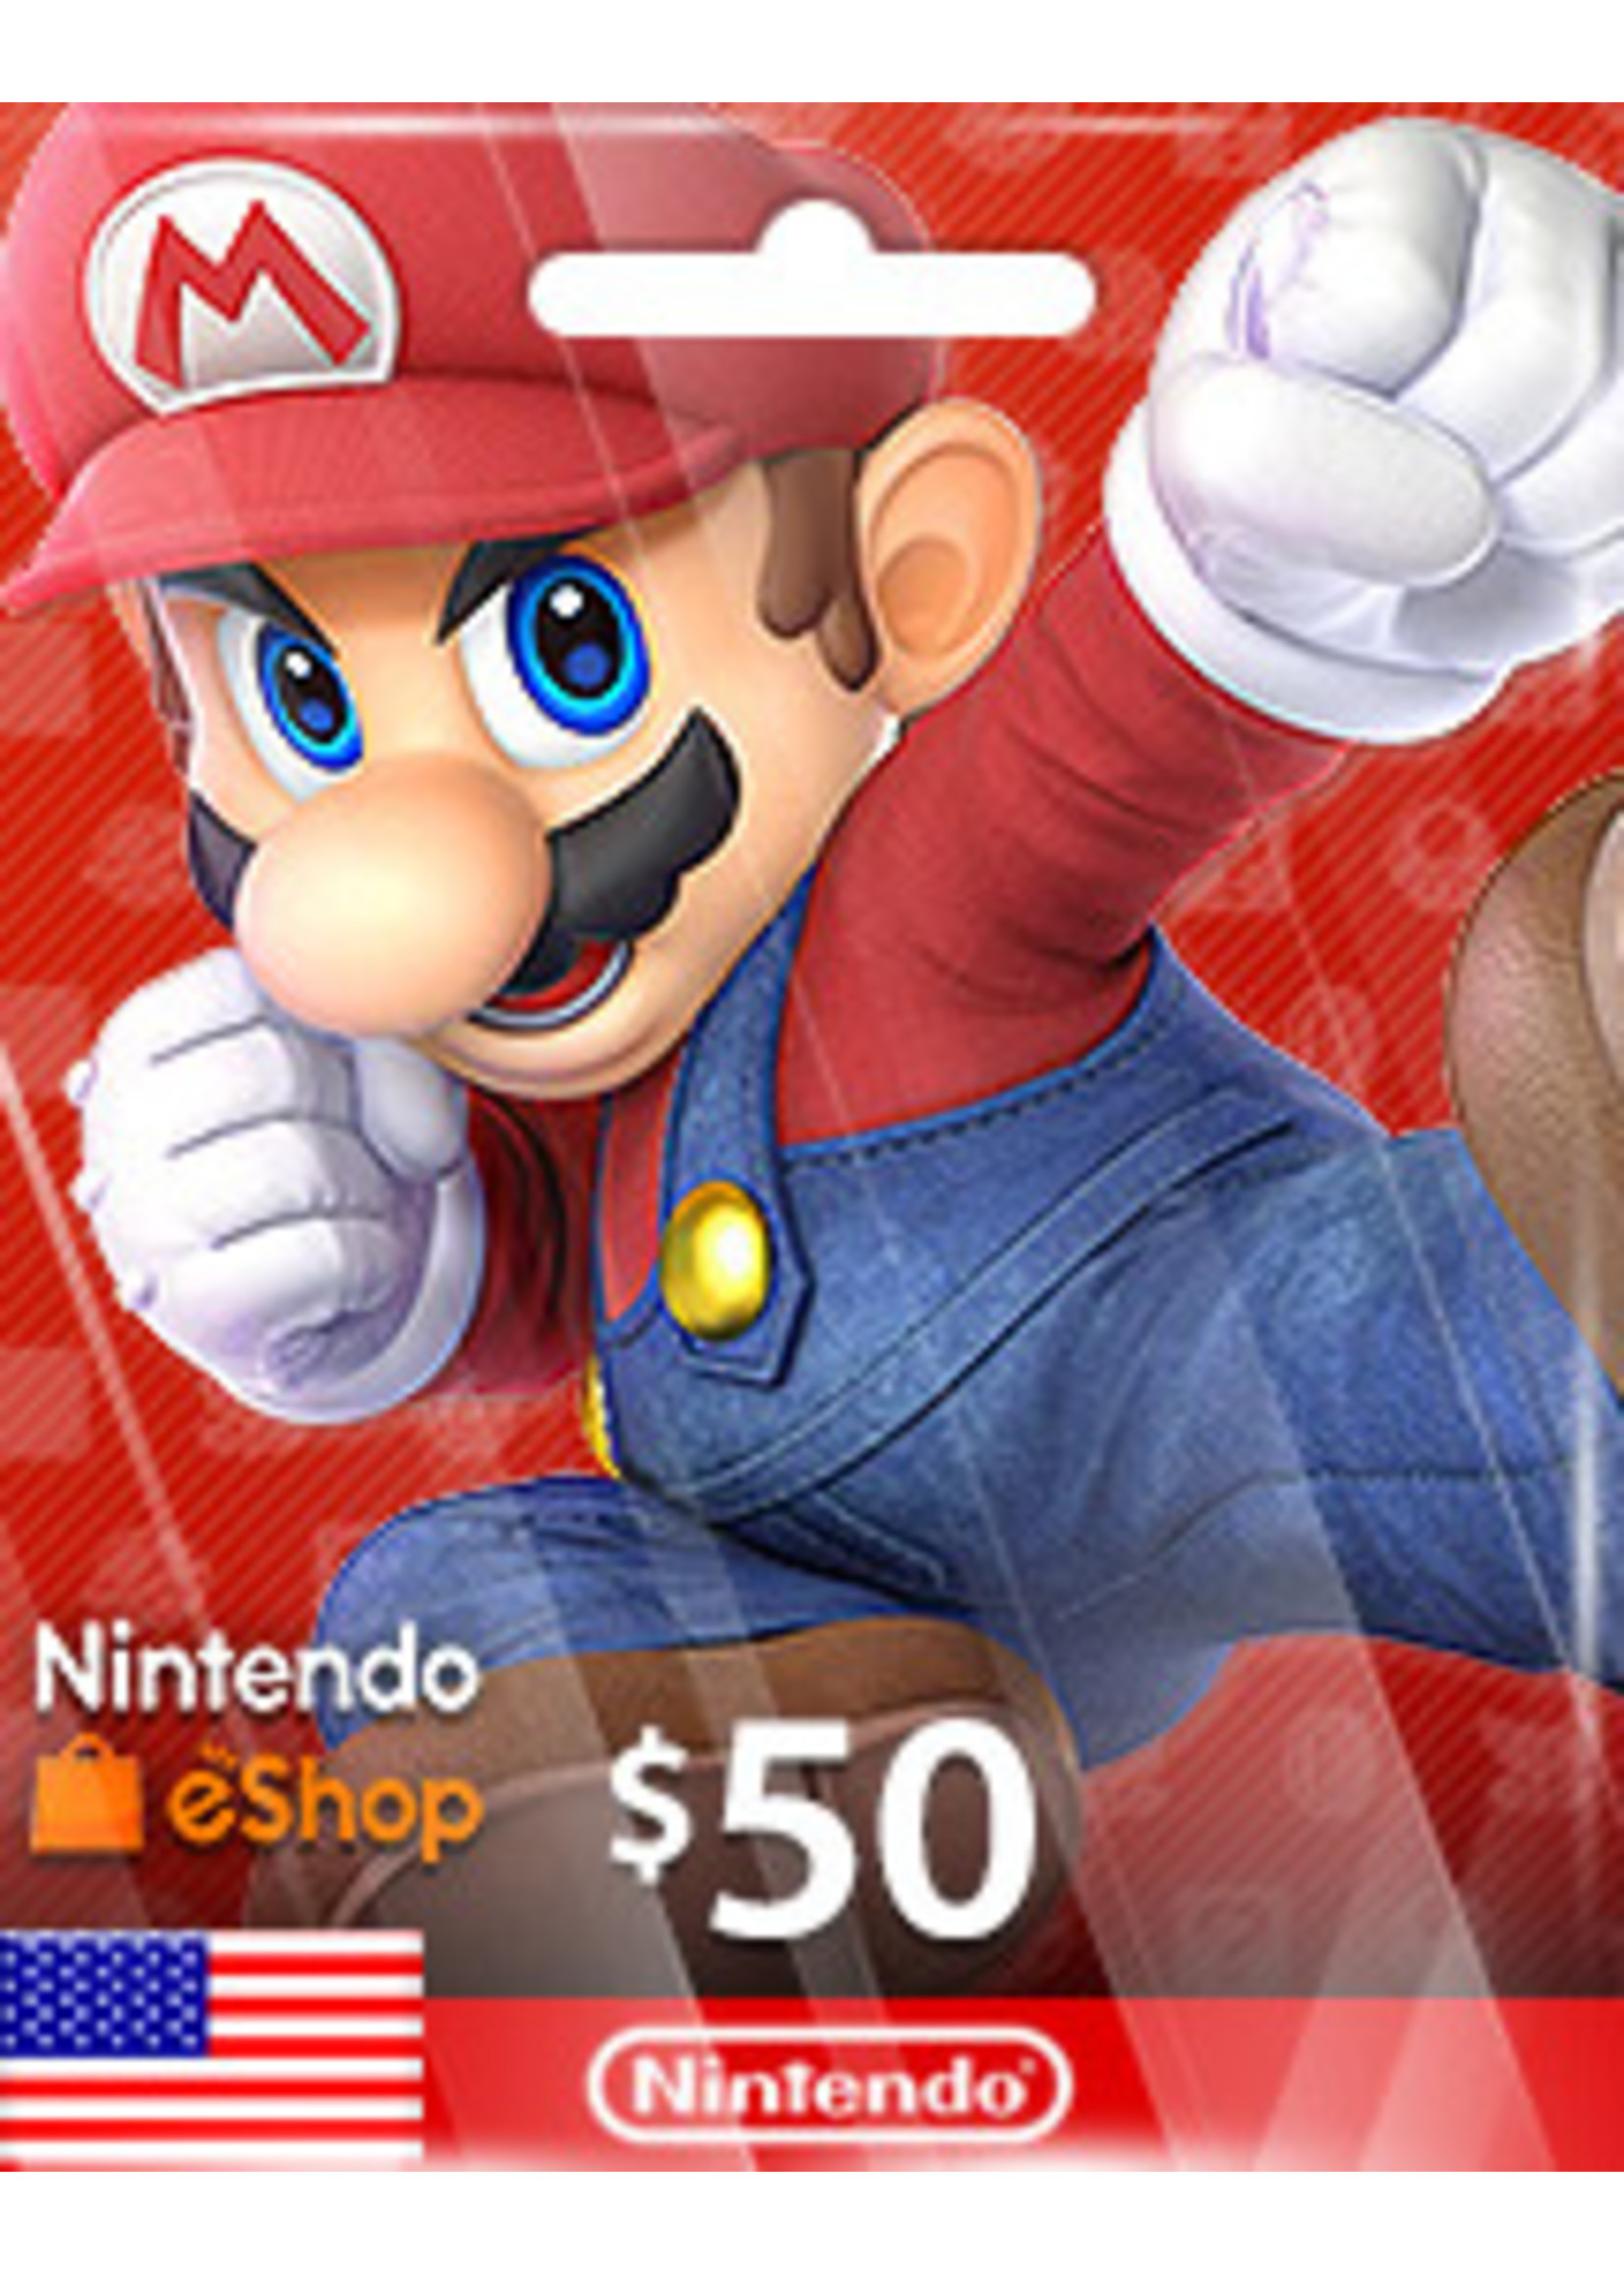 Nintendo Nintendo eShop $50